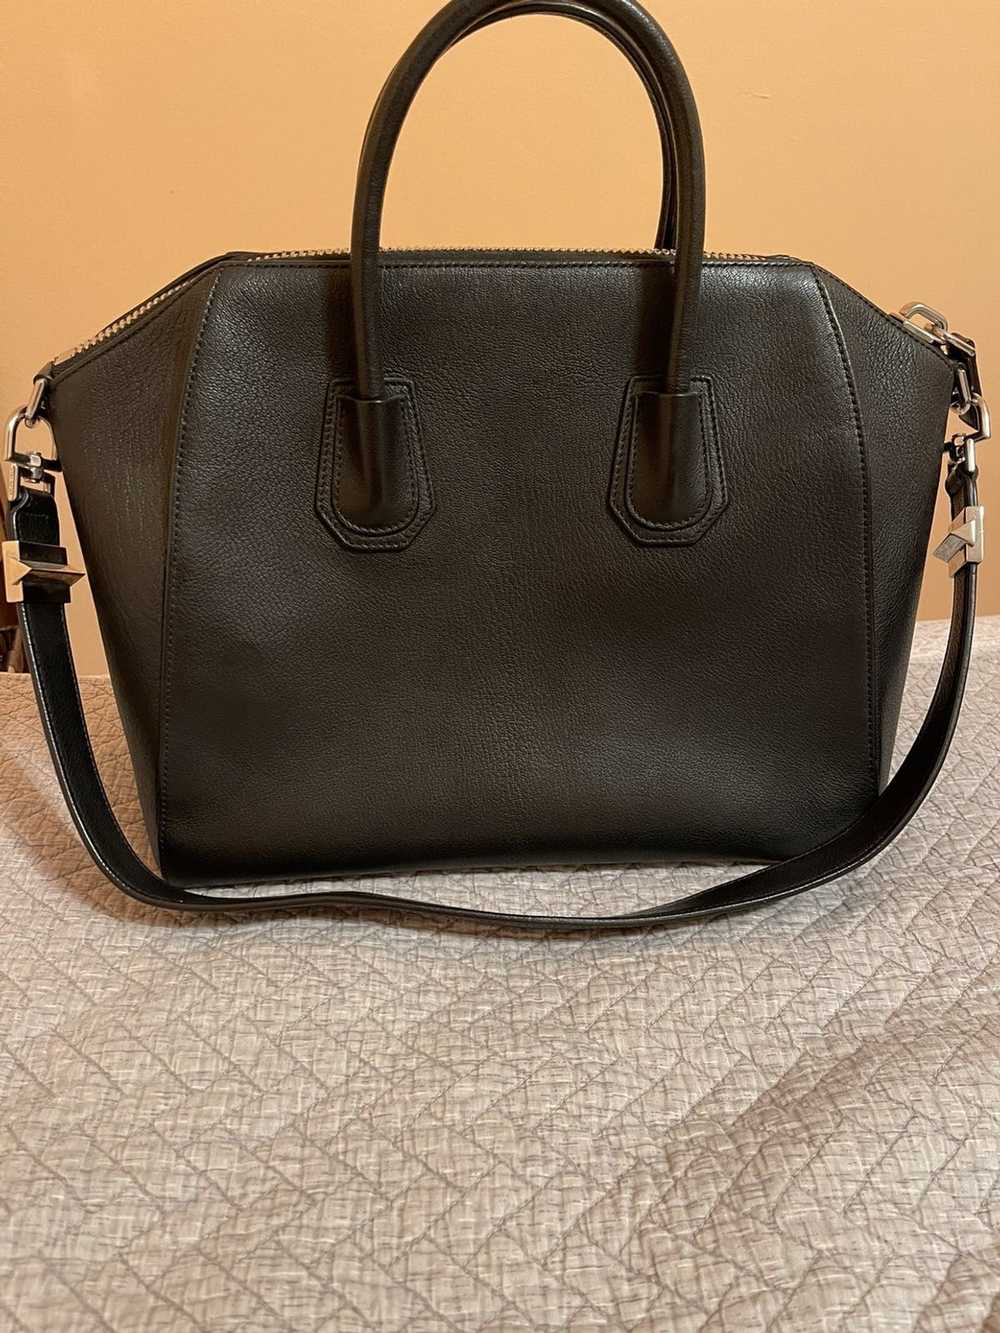 Givenchy Givenchy Antigona Black Leather Bag - image 2